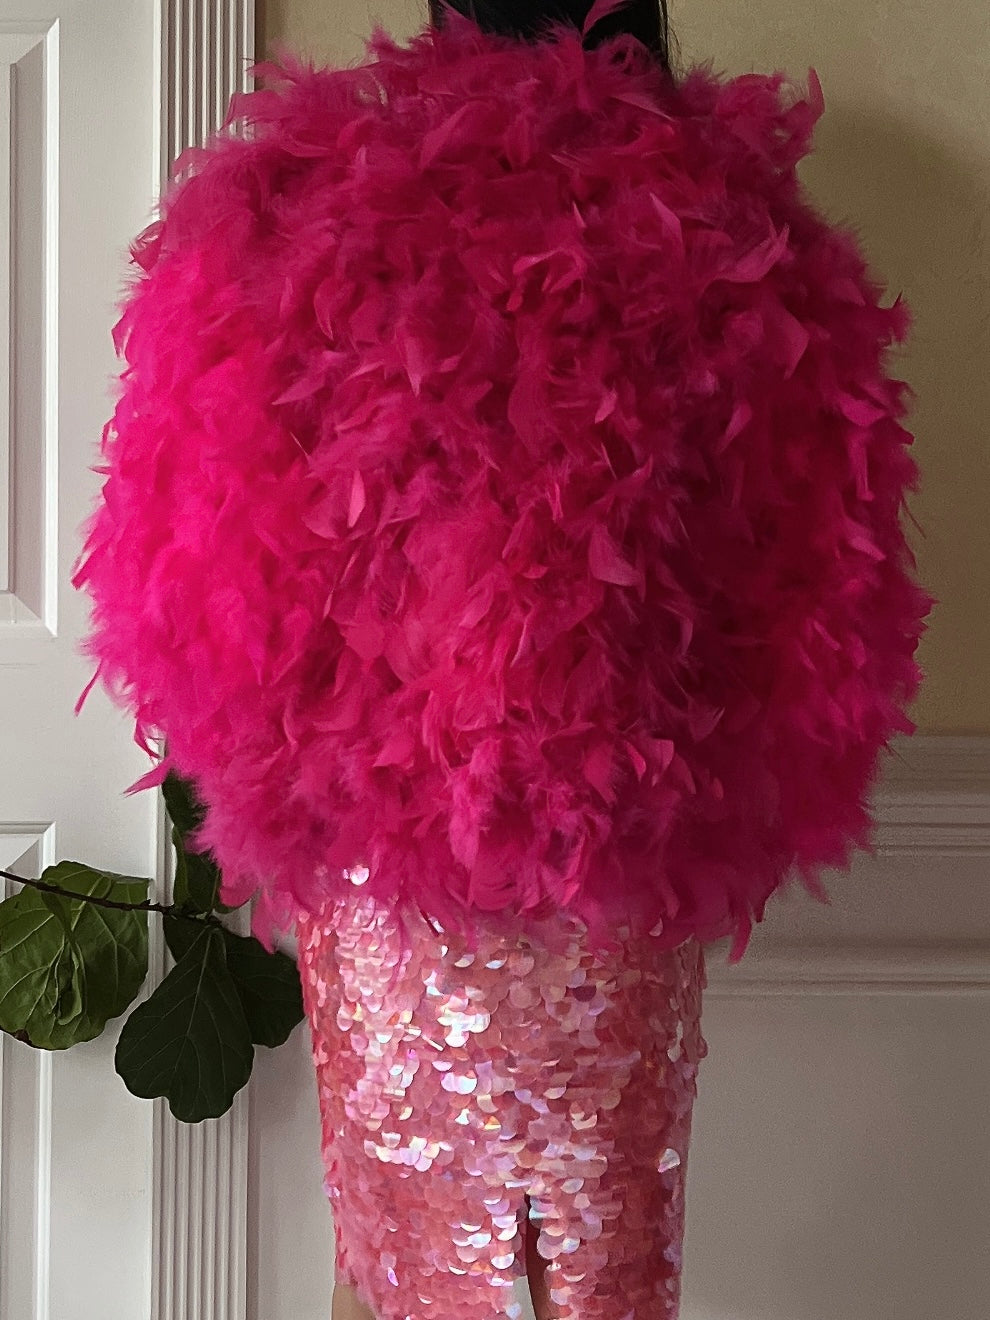 Vintage Hot Pink Feather Jacket - M